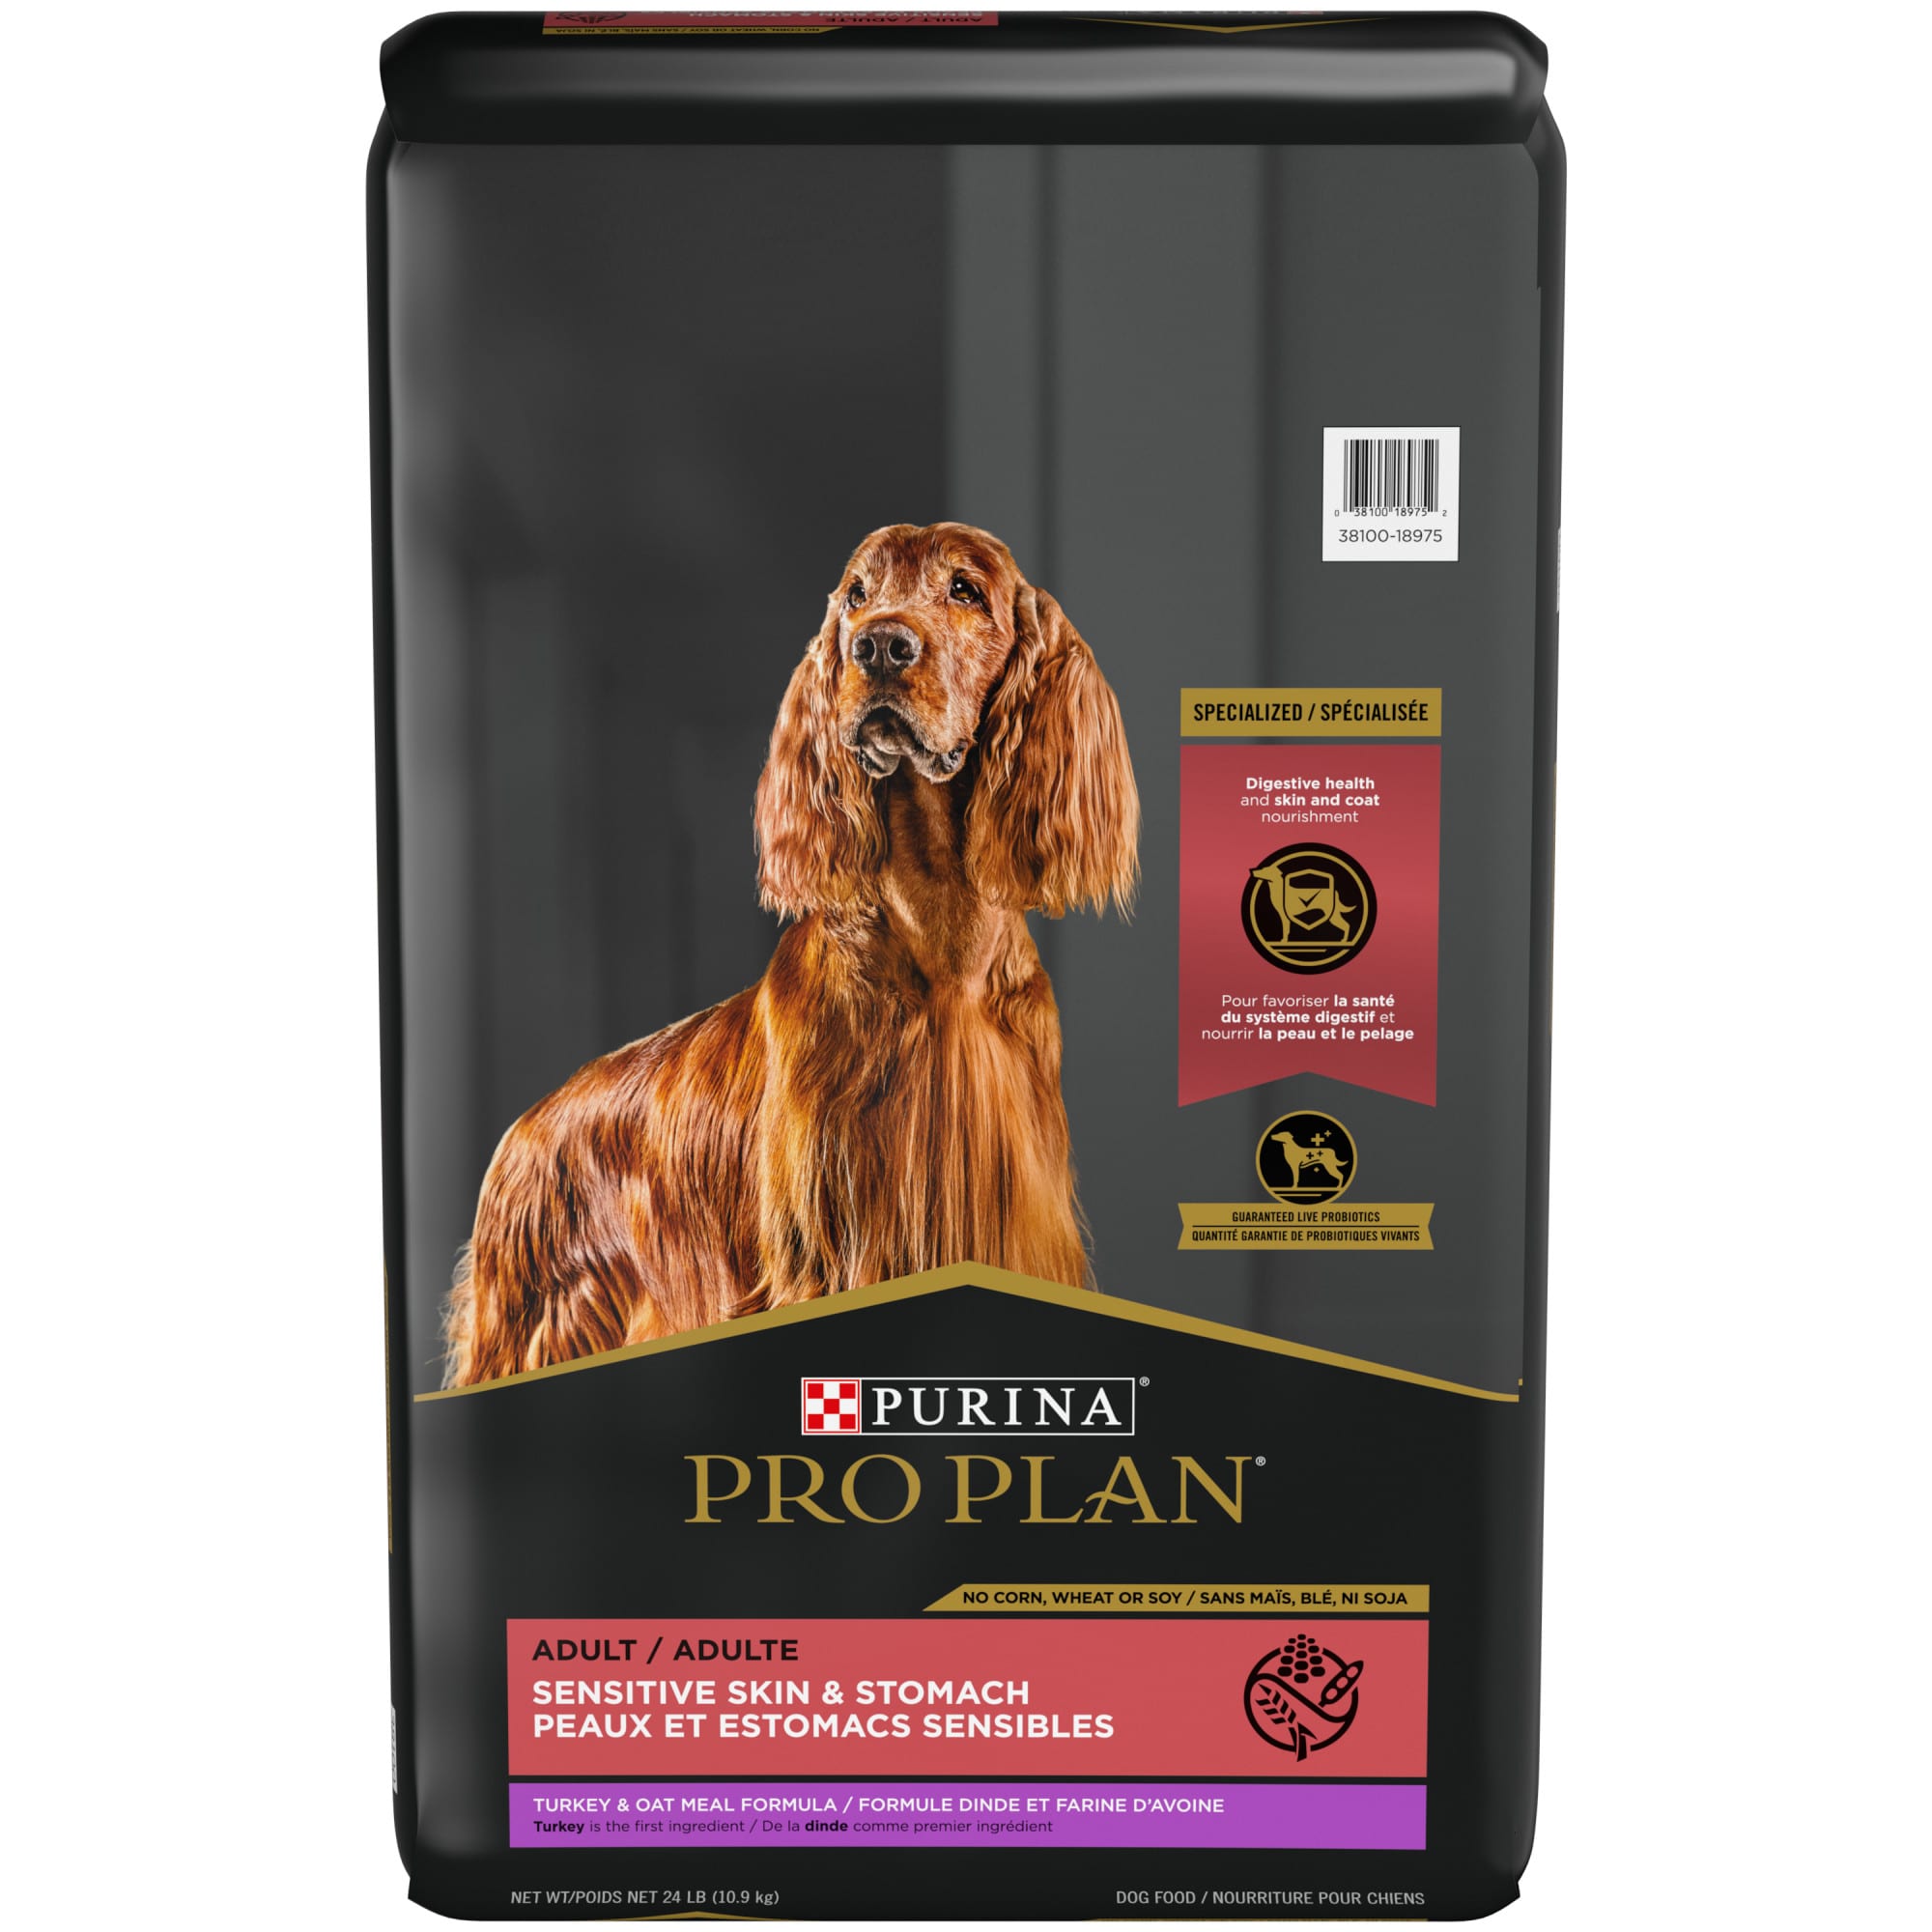 Purina Pro Plan Sensitive Skin & Stomach, Turkey & Oat Meal Formula Adult Dry Dog Food